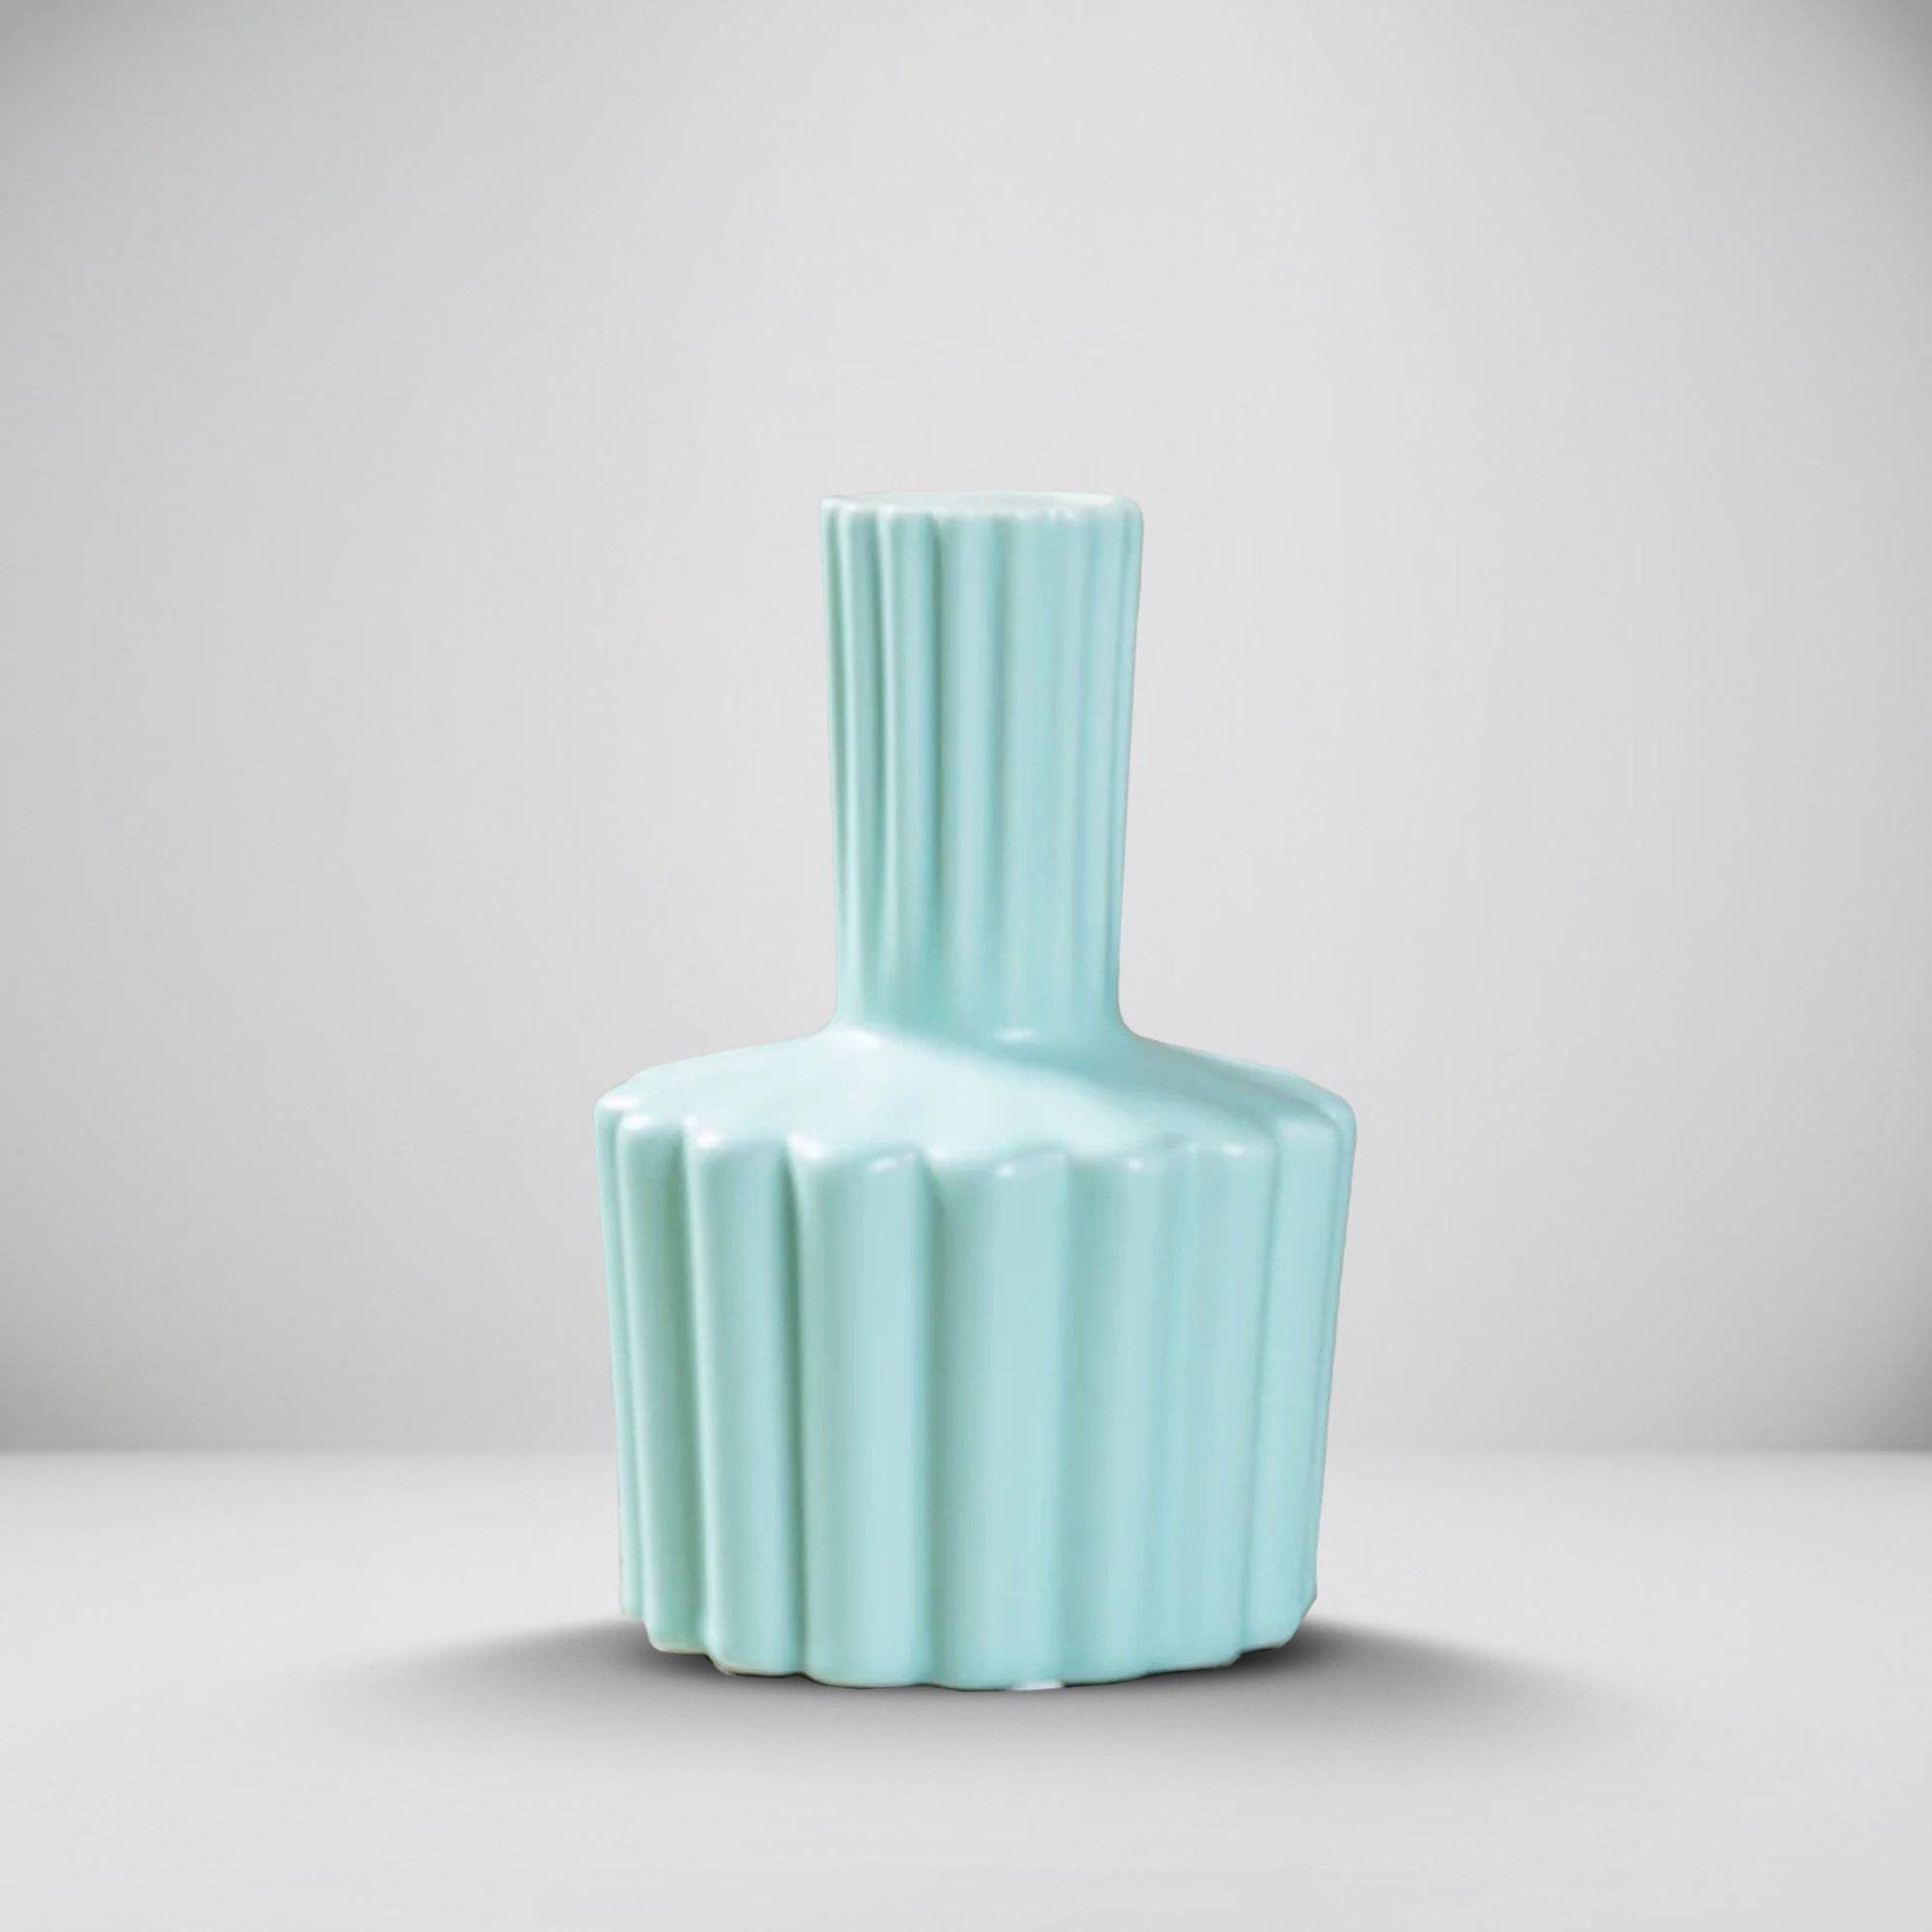 Decor ceramic blue vase - The Decor Circle